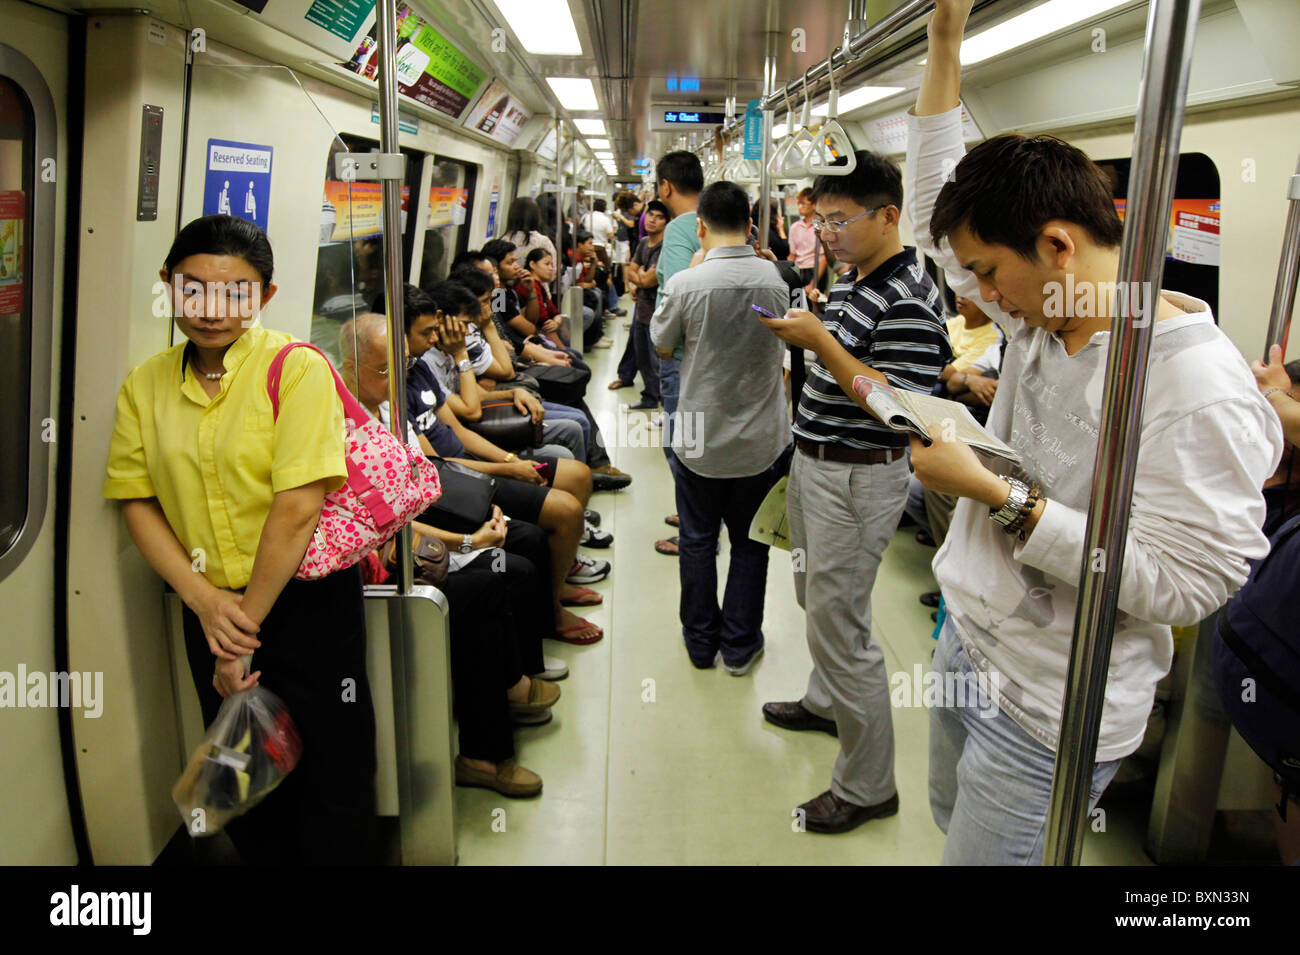 Singapur: pasajeros en un automóvil de MRT (Mass Rapid Transport) sistema de tren subterráneo Foto de stock